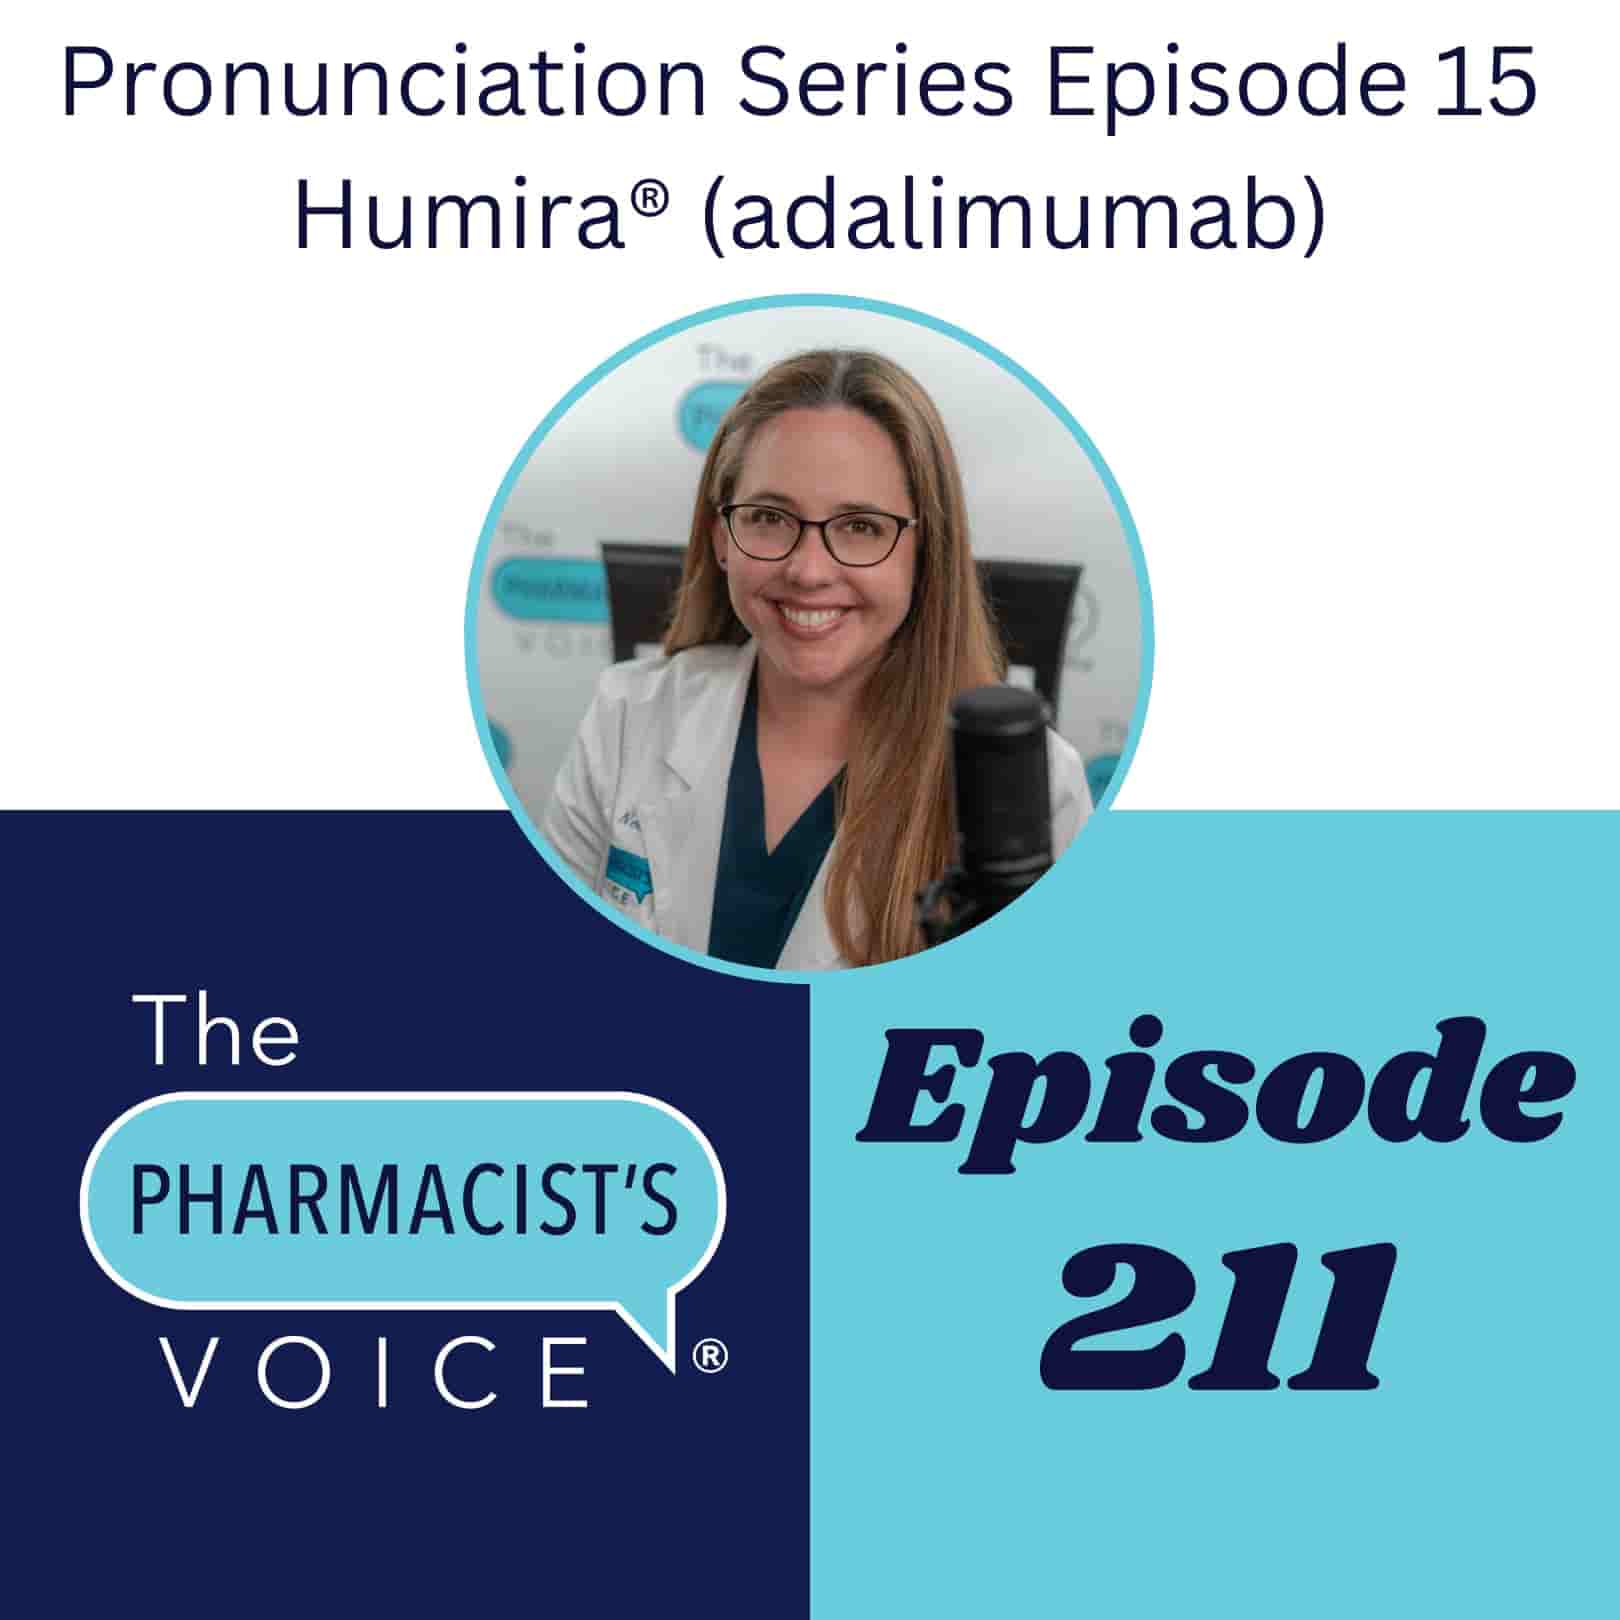 The Pharmacist's Voice Podcast Episode 211: Humira adalimumab. https://www.thepharmacistsvoice.com/podcast